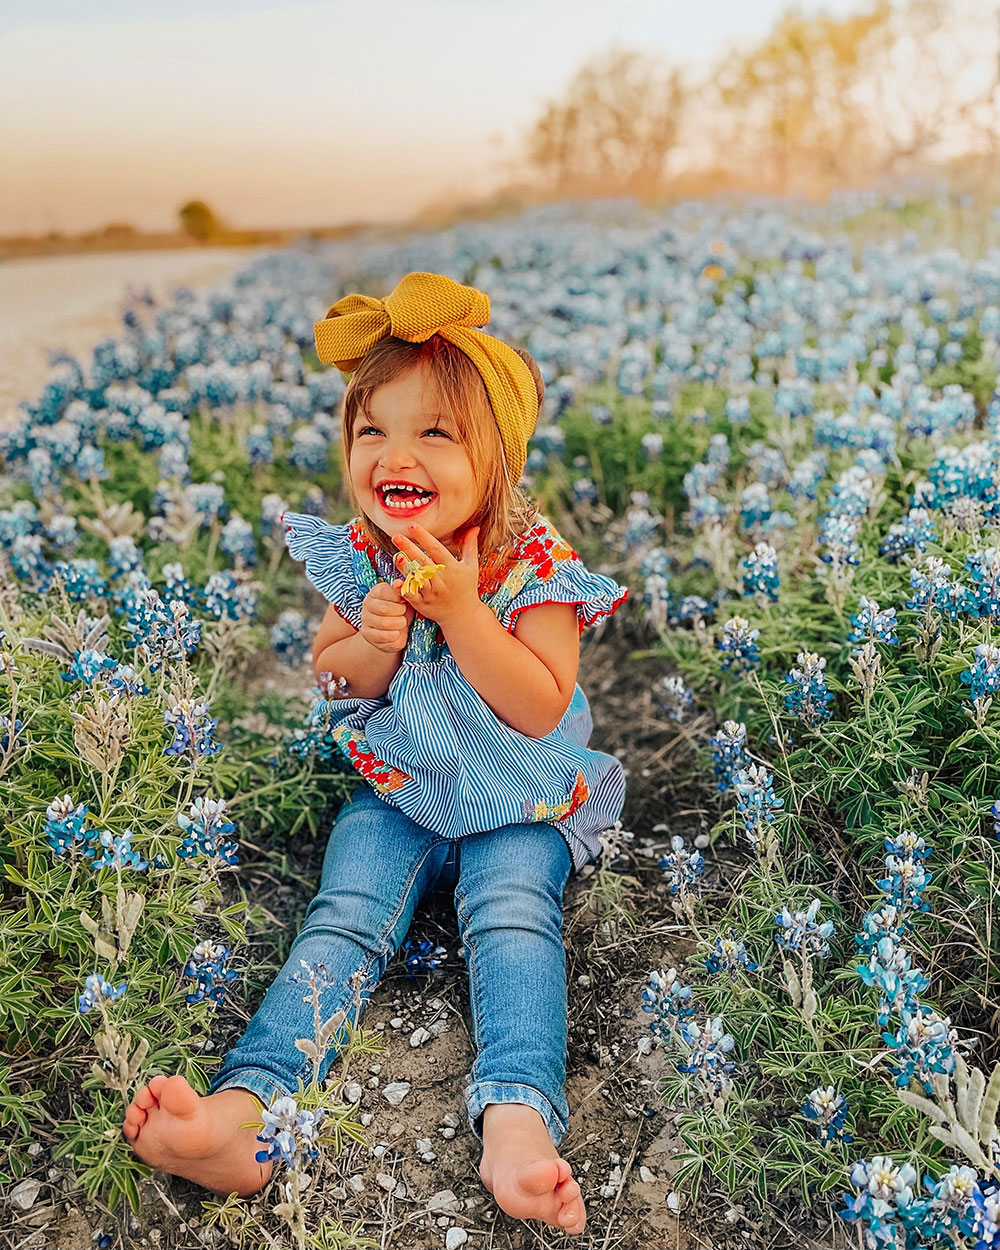 kids outdoor activities - plant flowers texas bluebonnets